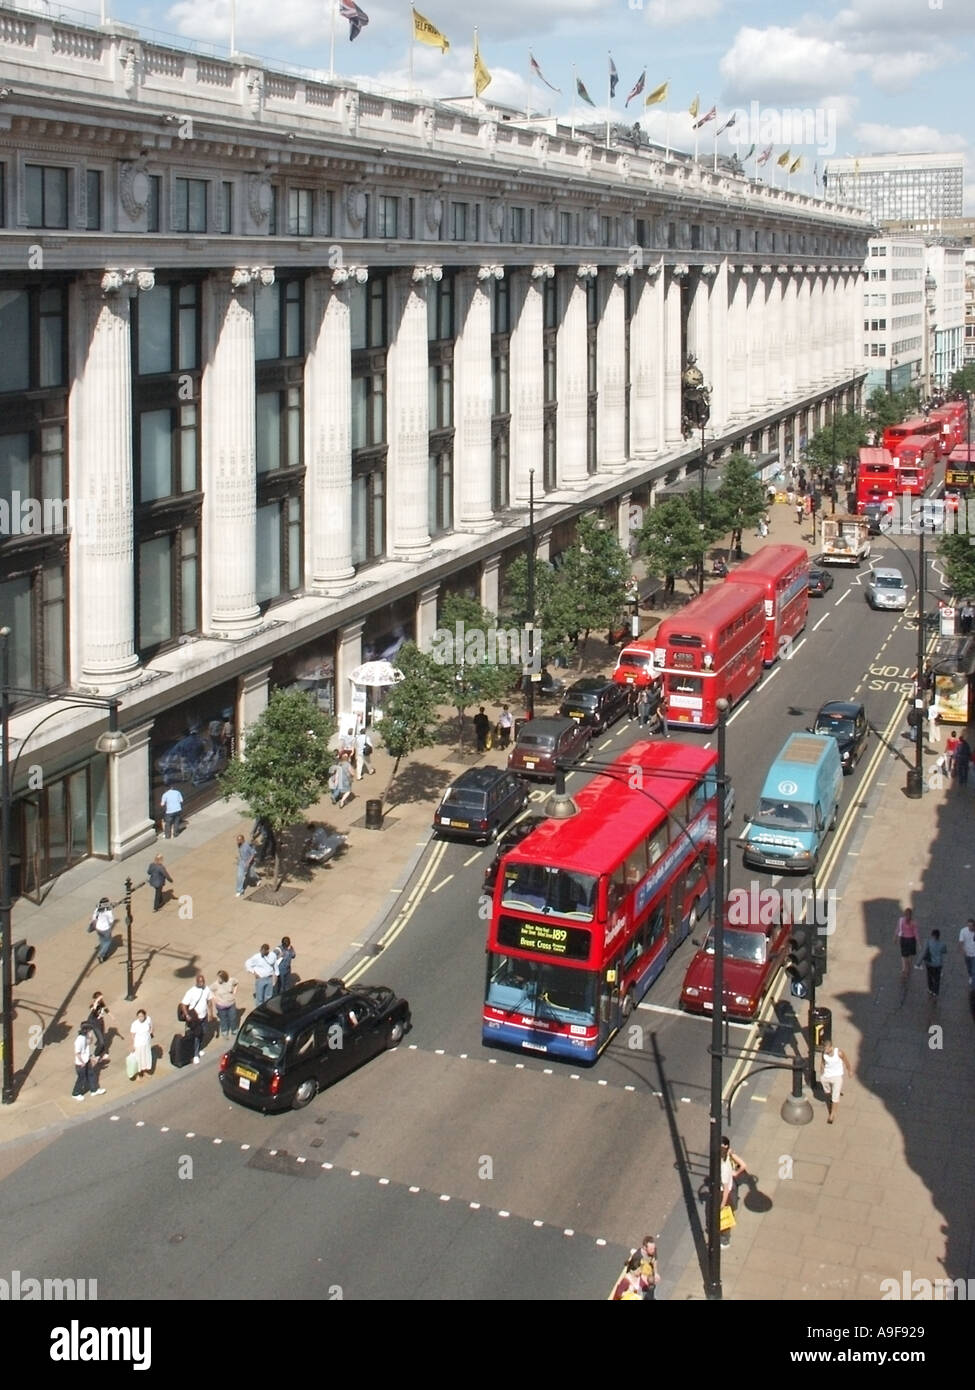 Vista aerea guardando giù occupato da Oxford Street e dal grande magazzino Selfridges colonnade & shoppers London red double decker bus West End England Regno Unito Foto Stock